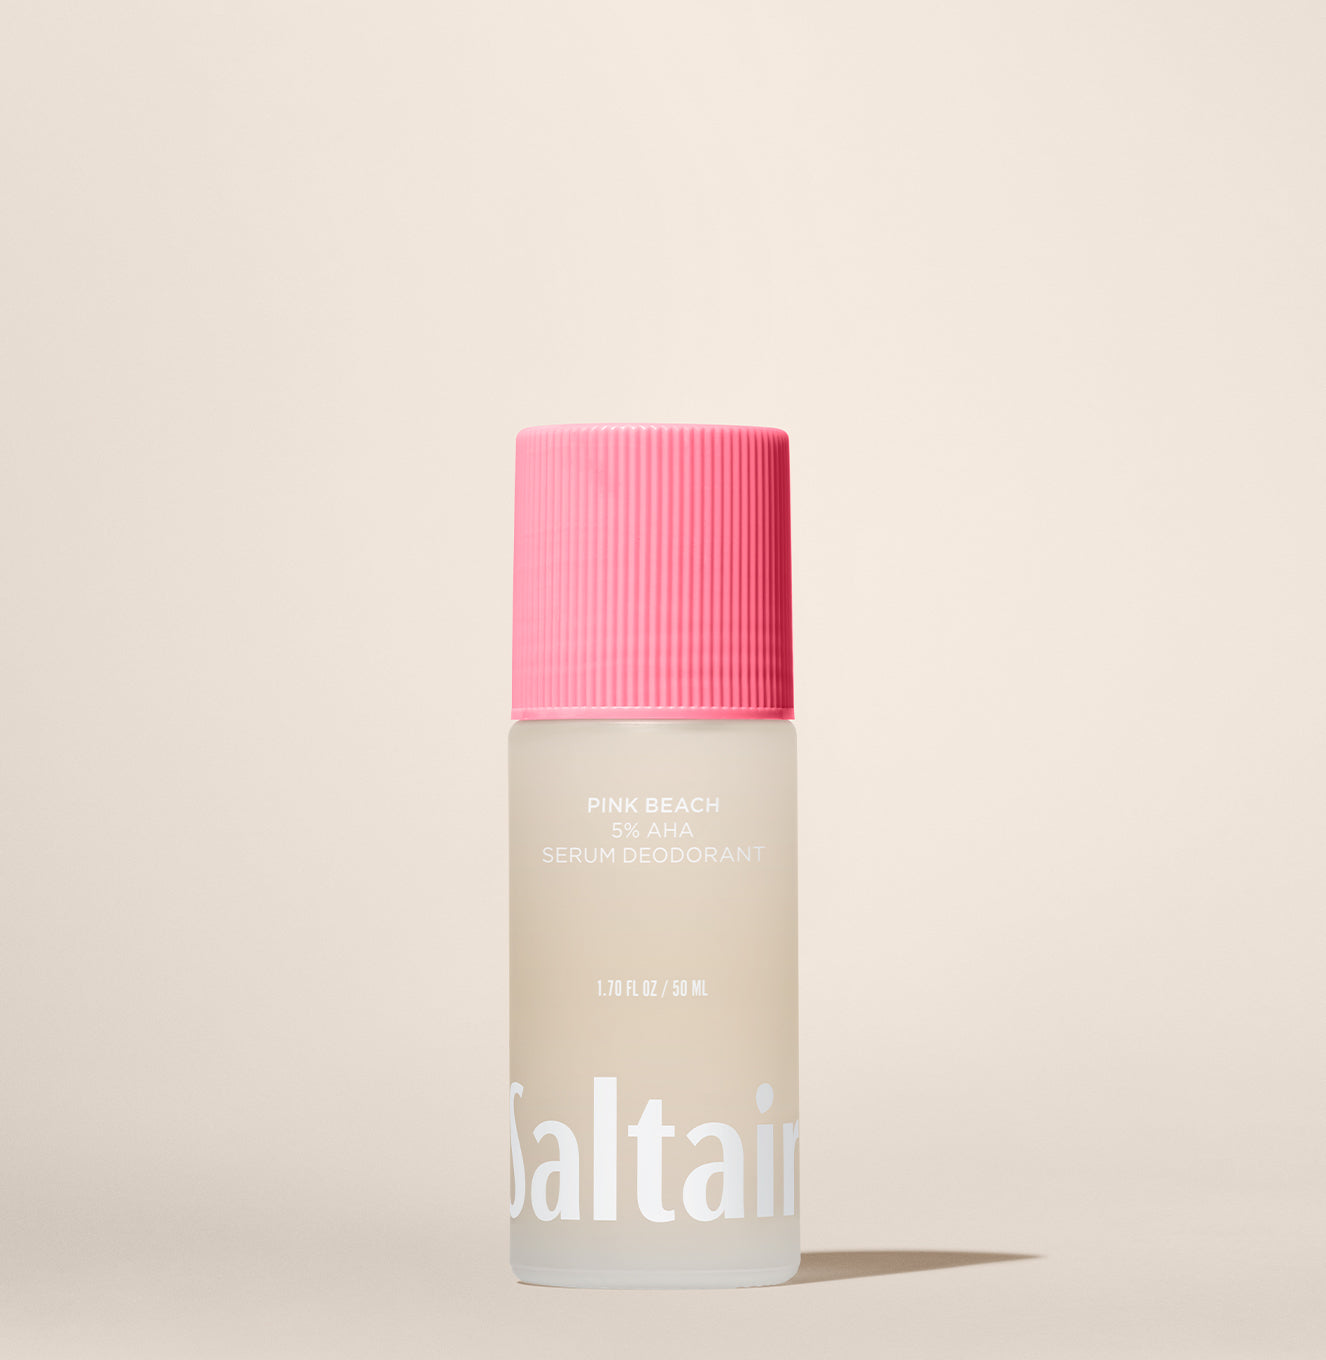 Serum Deodorant With 5% AHA - Pink Beach | Saltair